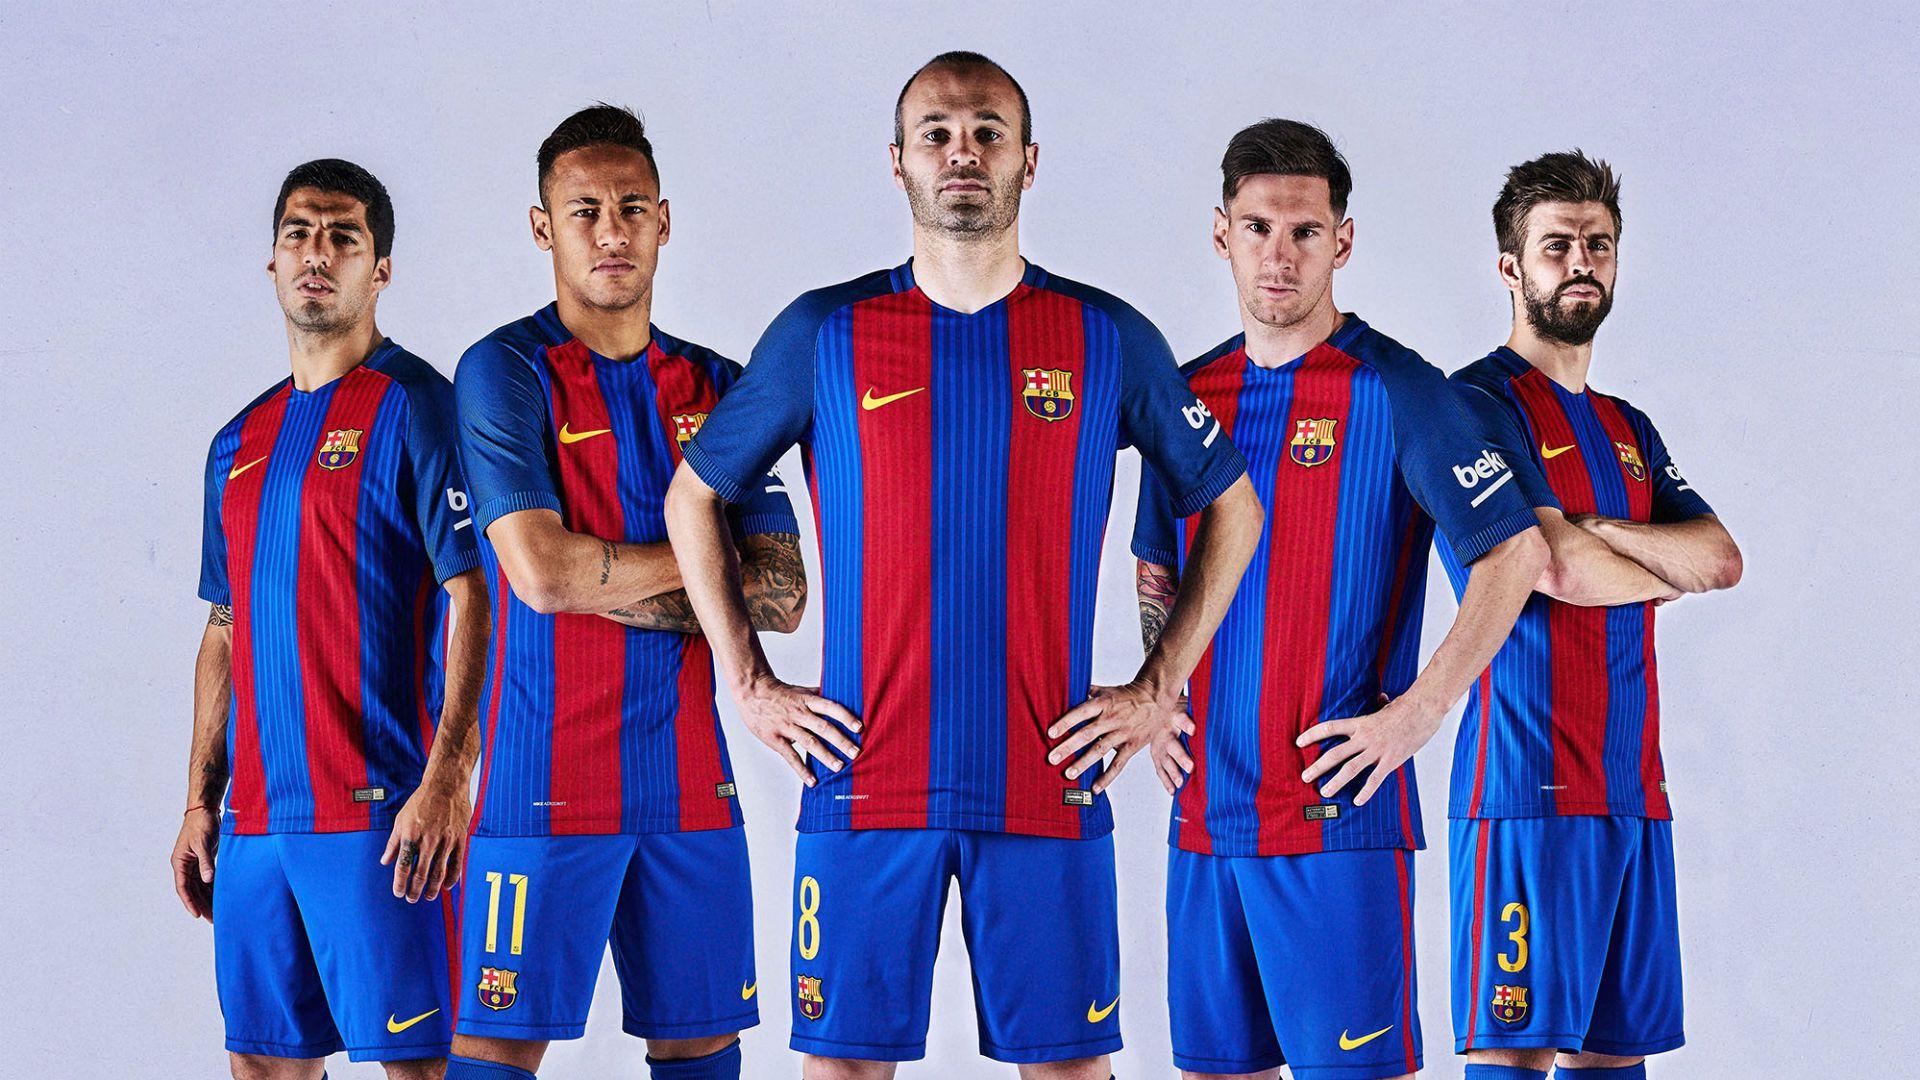 Barcelona Players Wallpaper2 Wallpaper: Players, Teams, Leagues